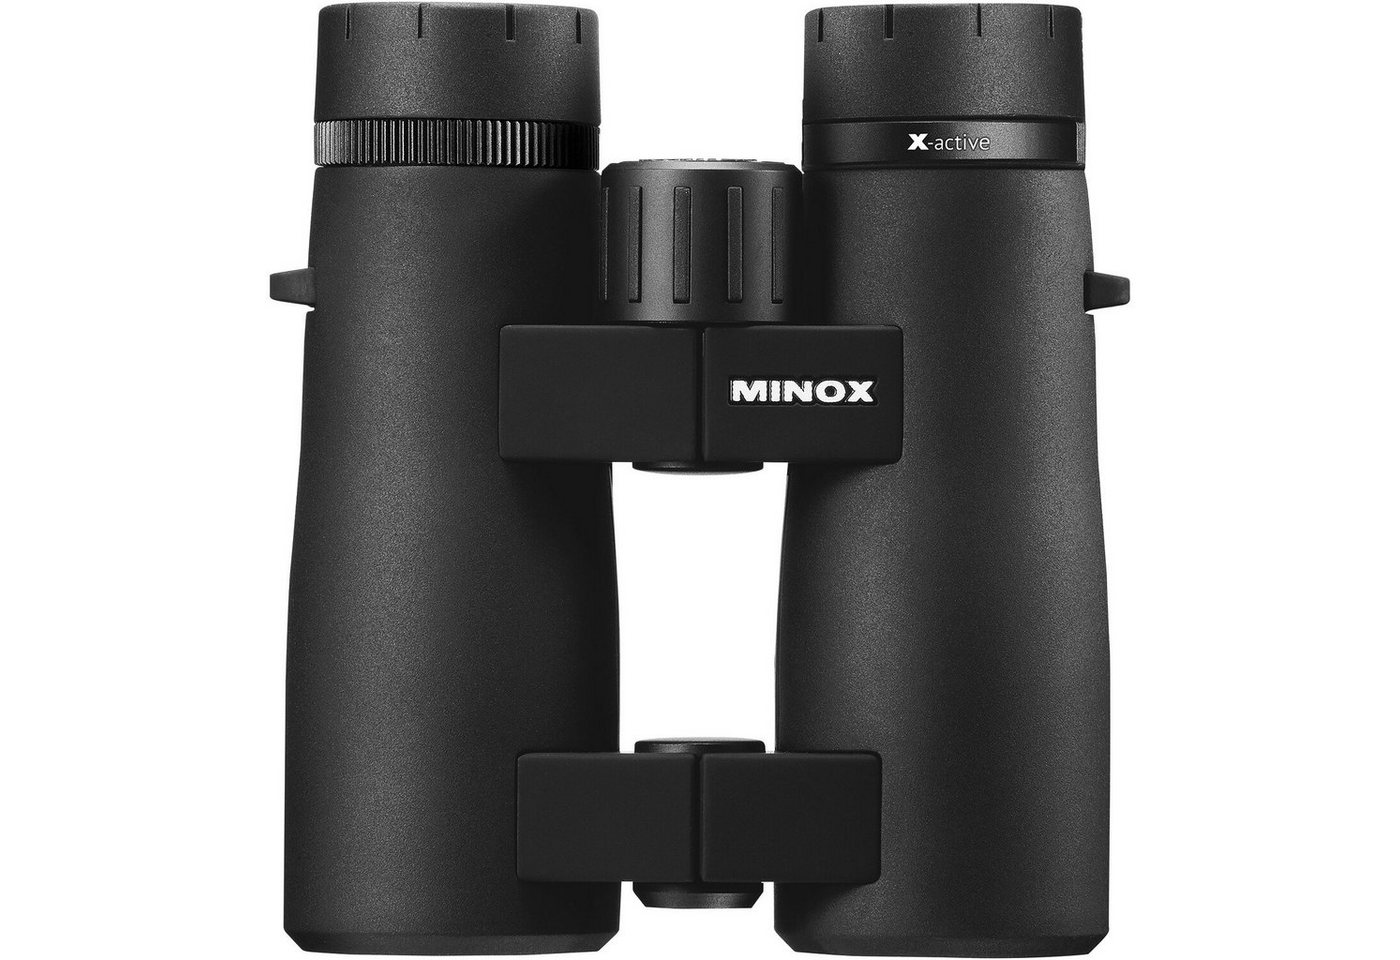 Minox Fernglas X-active 10x44 Fernglas von Minox